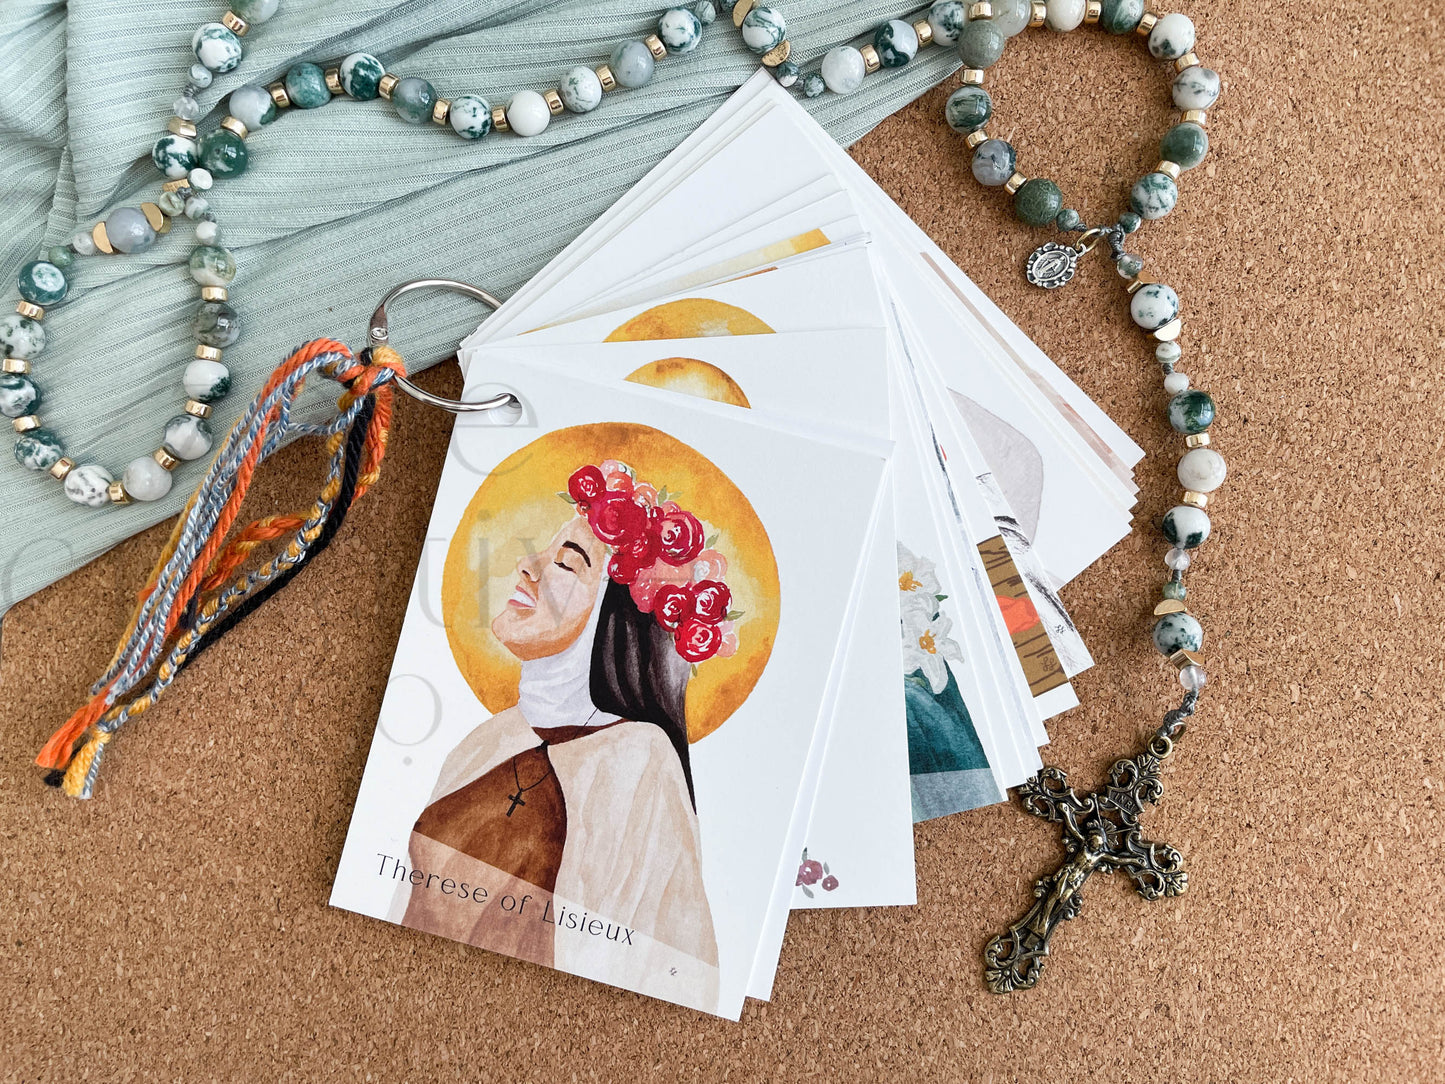 Hearts of the Holy Family | Prayer Card